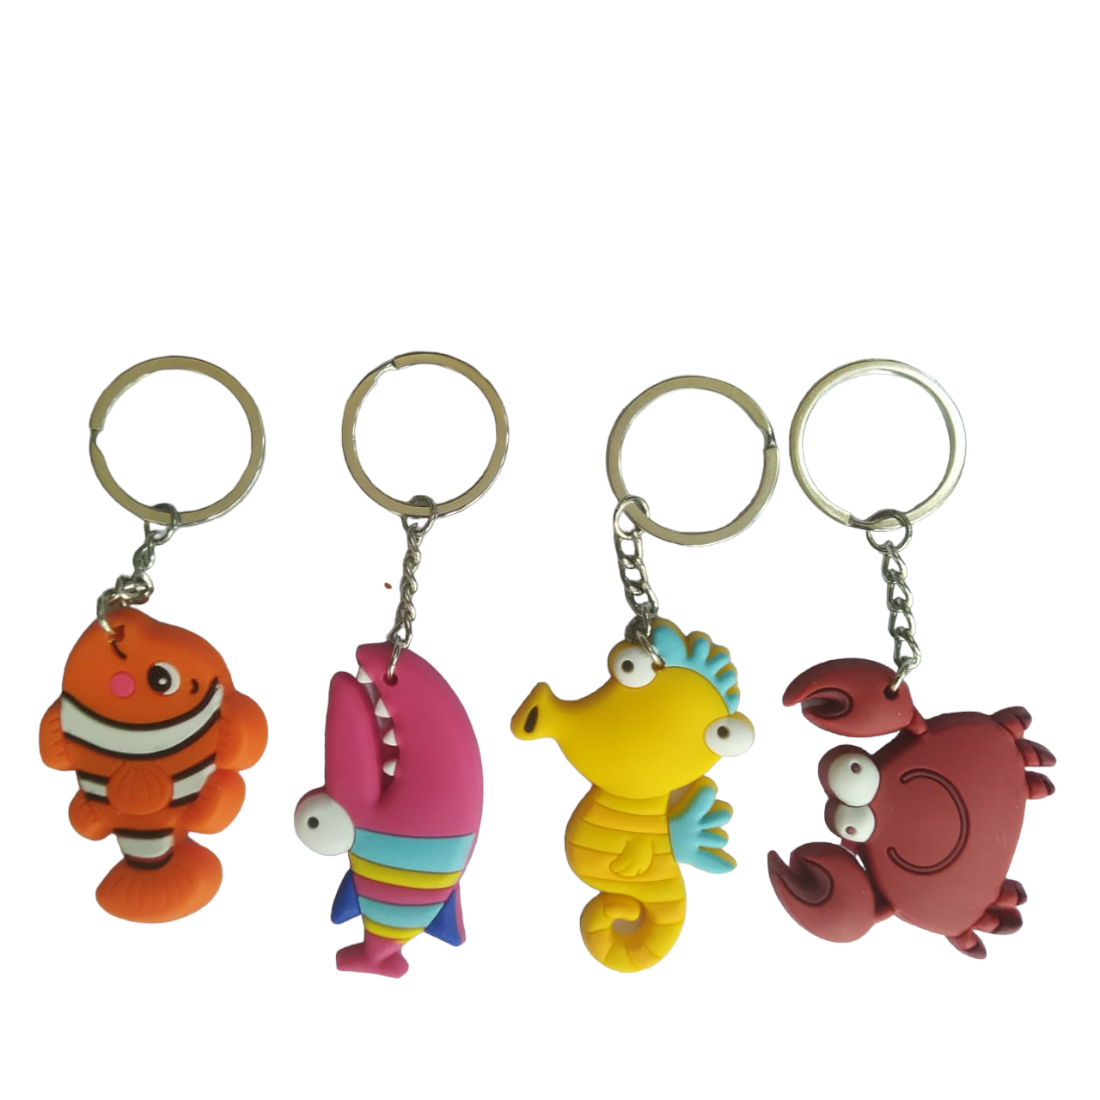 Key Ring For Kids | Key Chains Cartoon Theme - For Boys, Girls & Birthday Return gift (Pack of 12)